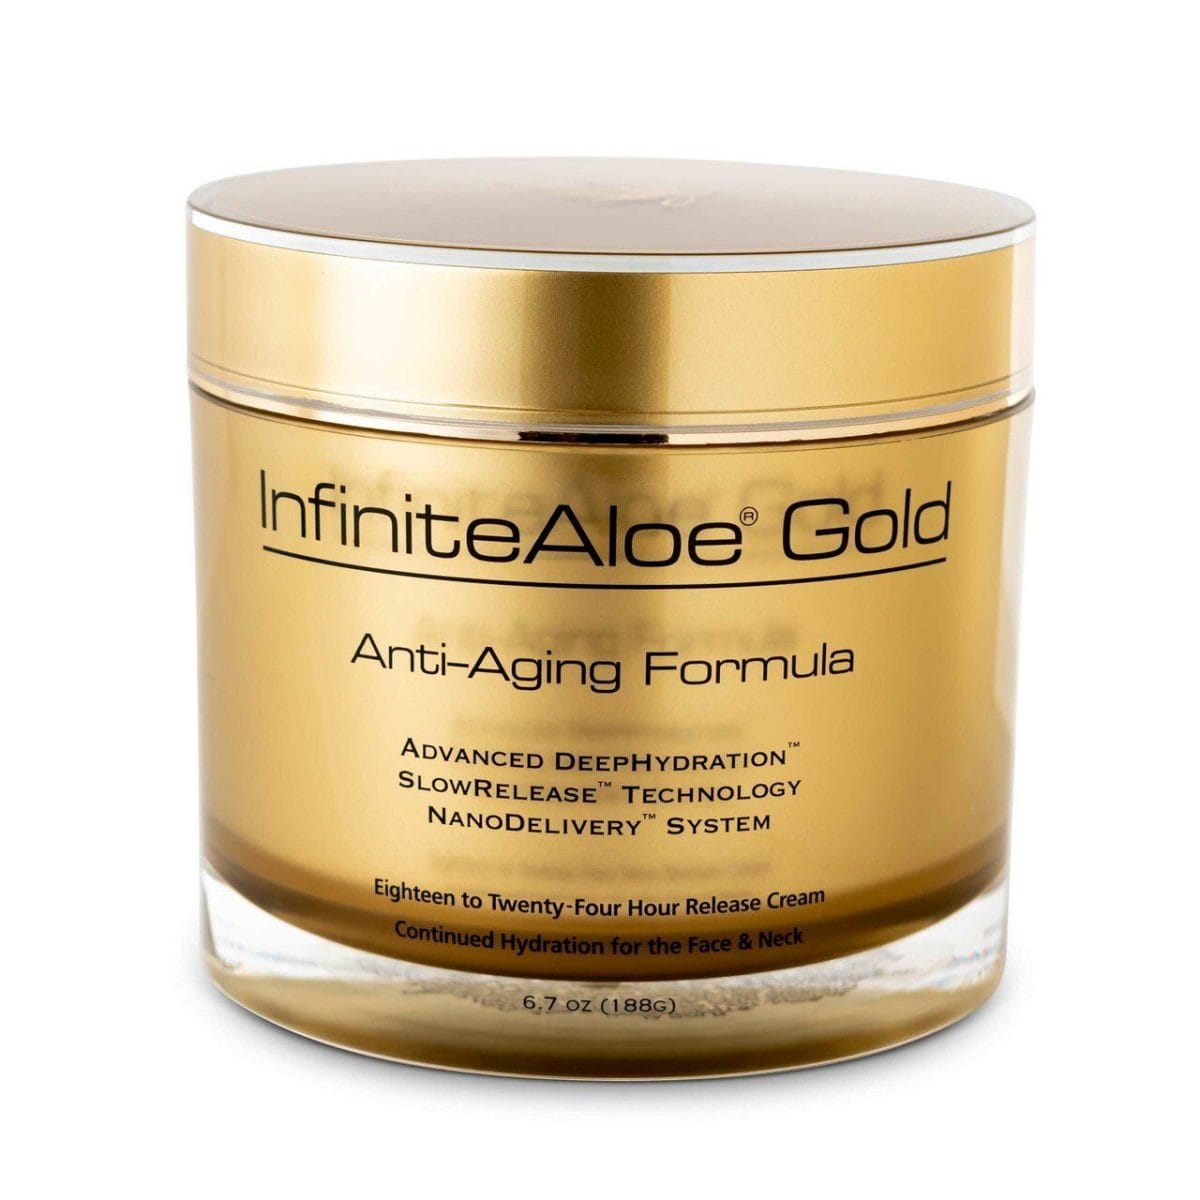 InfiniteAloe Gold Anti-Aging 6.7oz jar